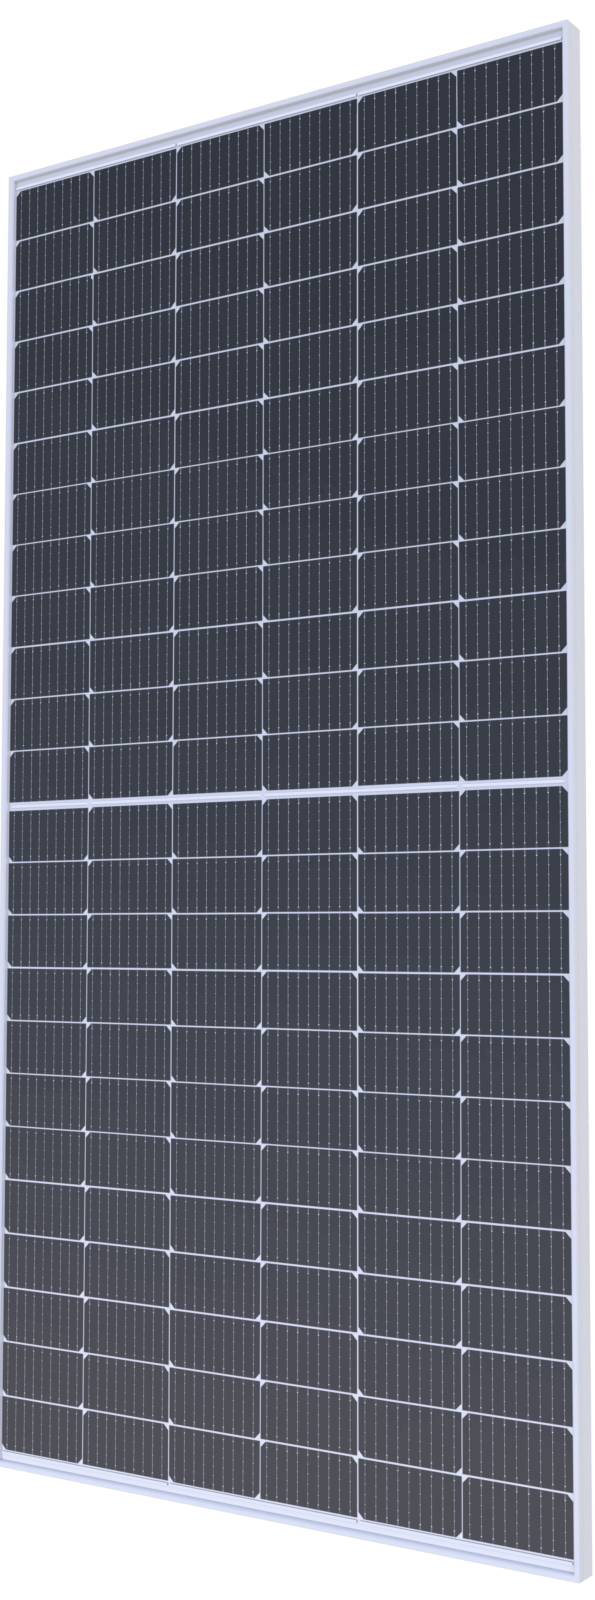 Boviet Solar Pv Module Vega Series Mono Bifacial Utility 440 450w Side View Photo